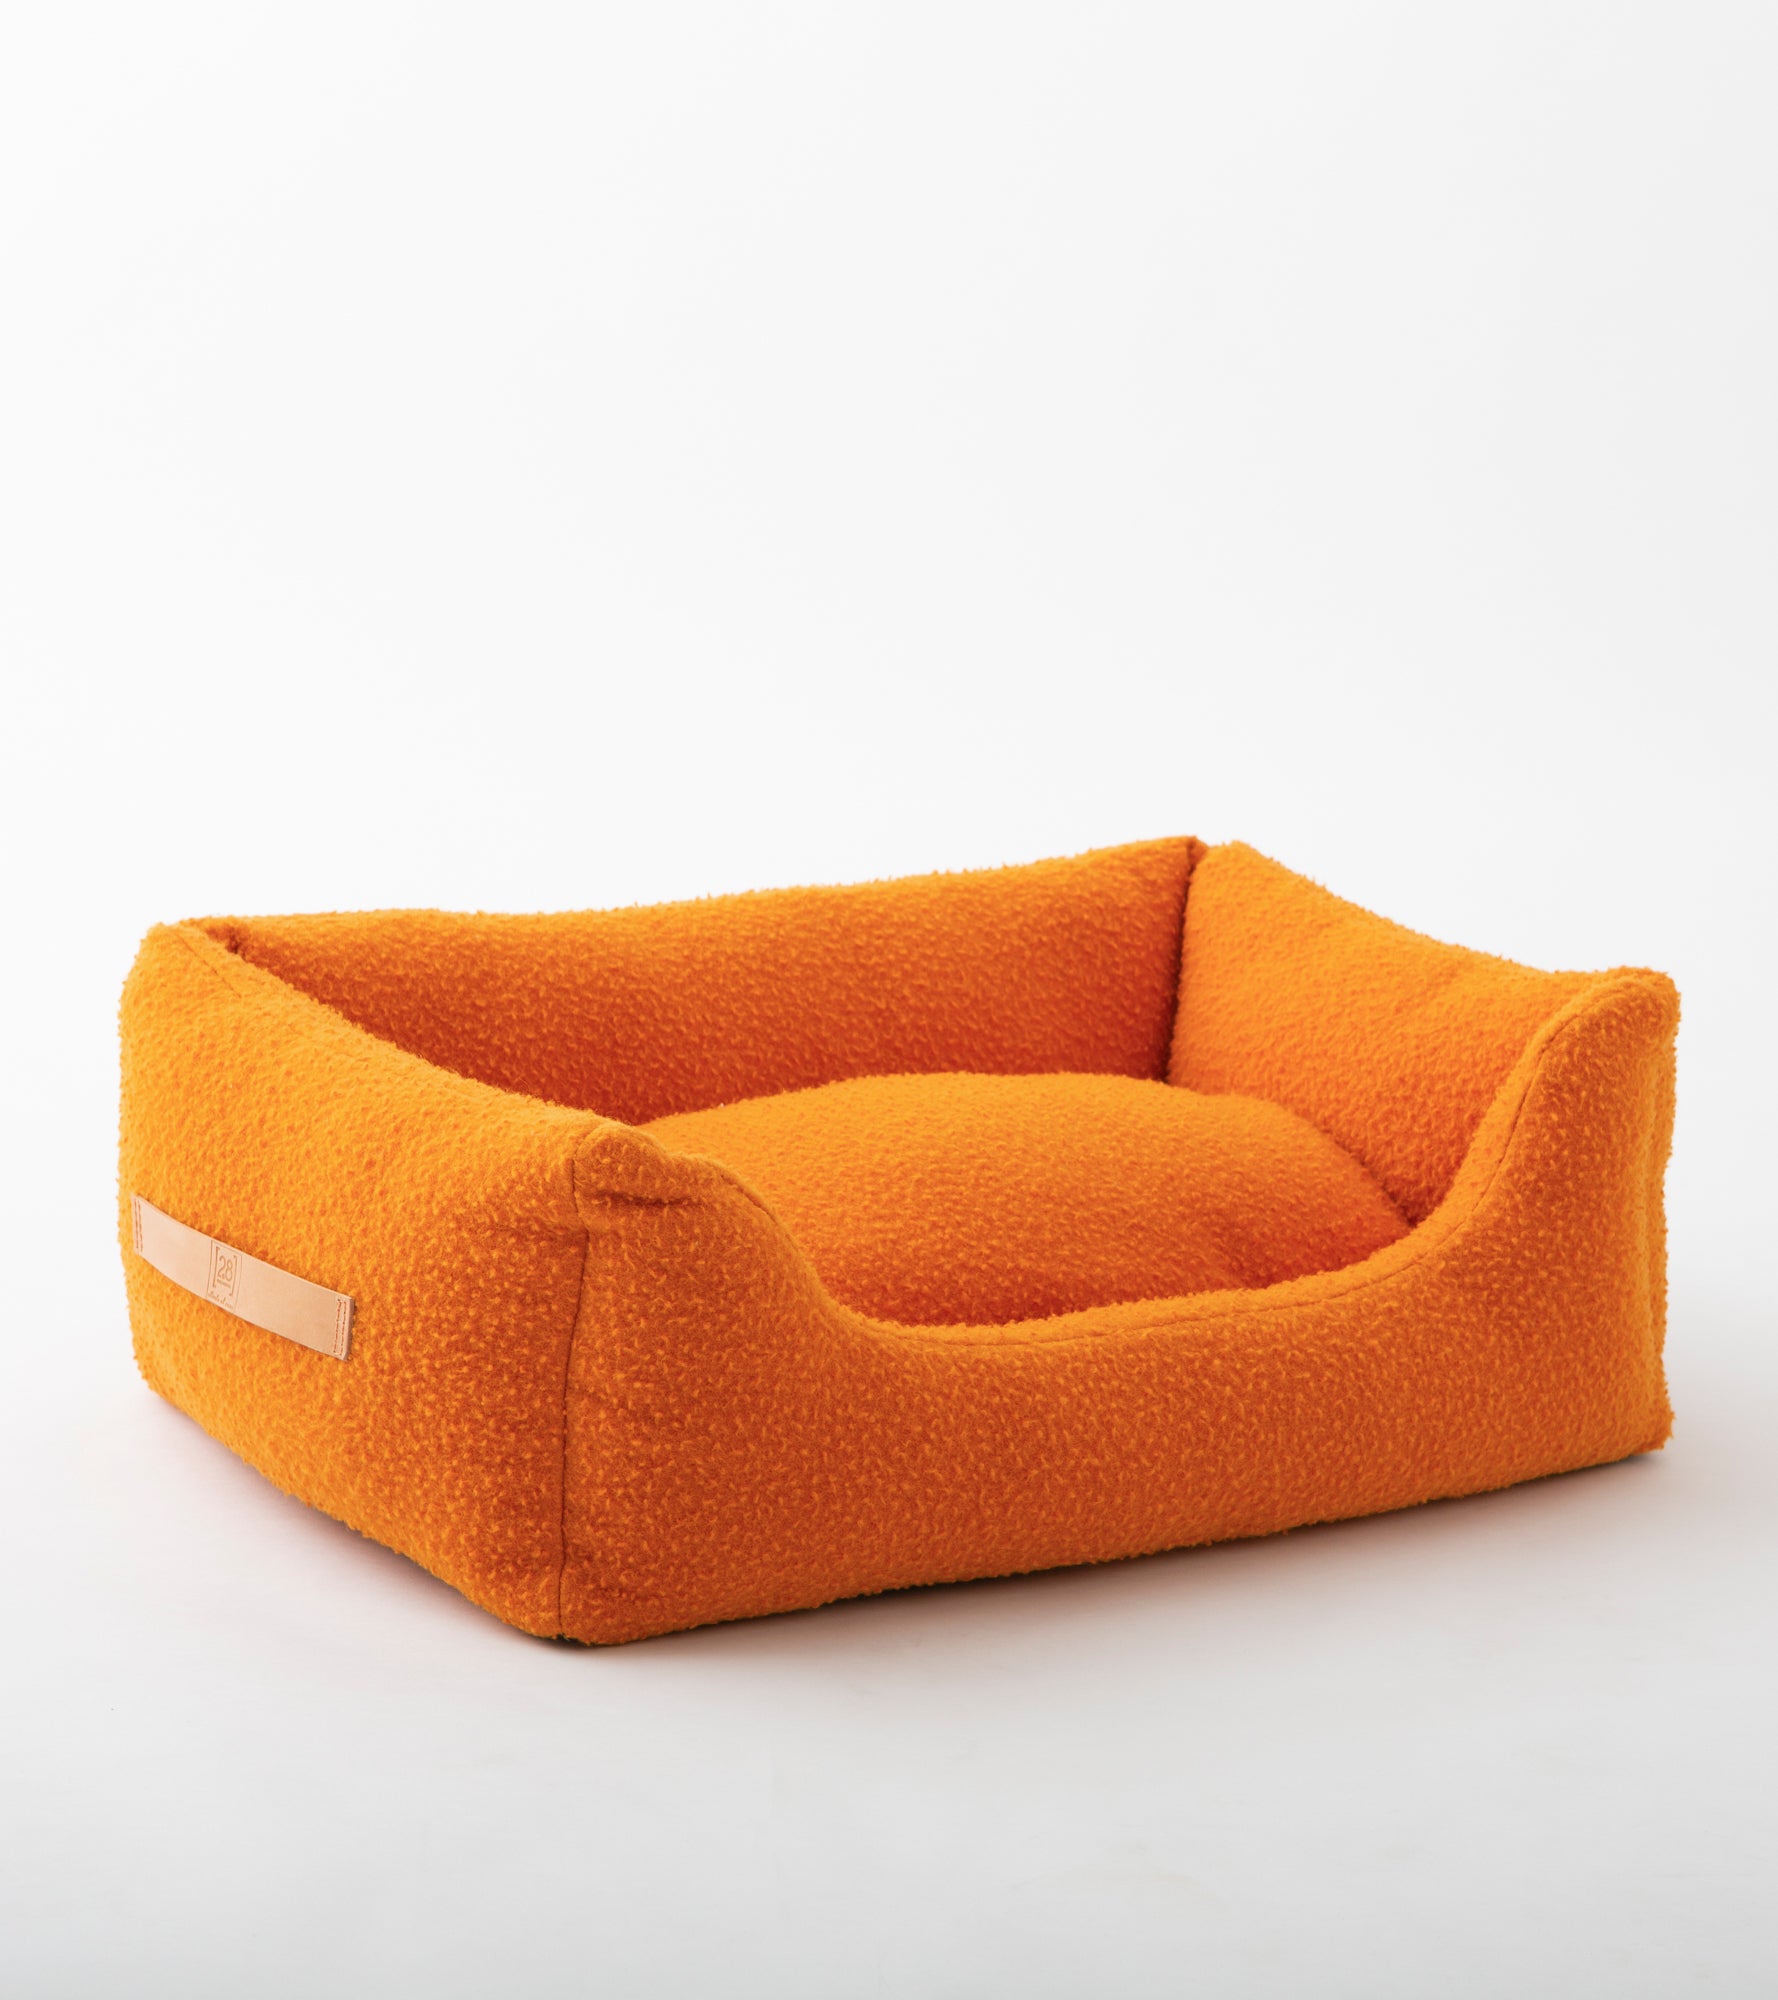 orange-casentino-dog-beds.jpg